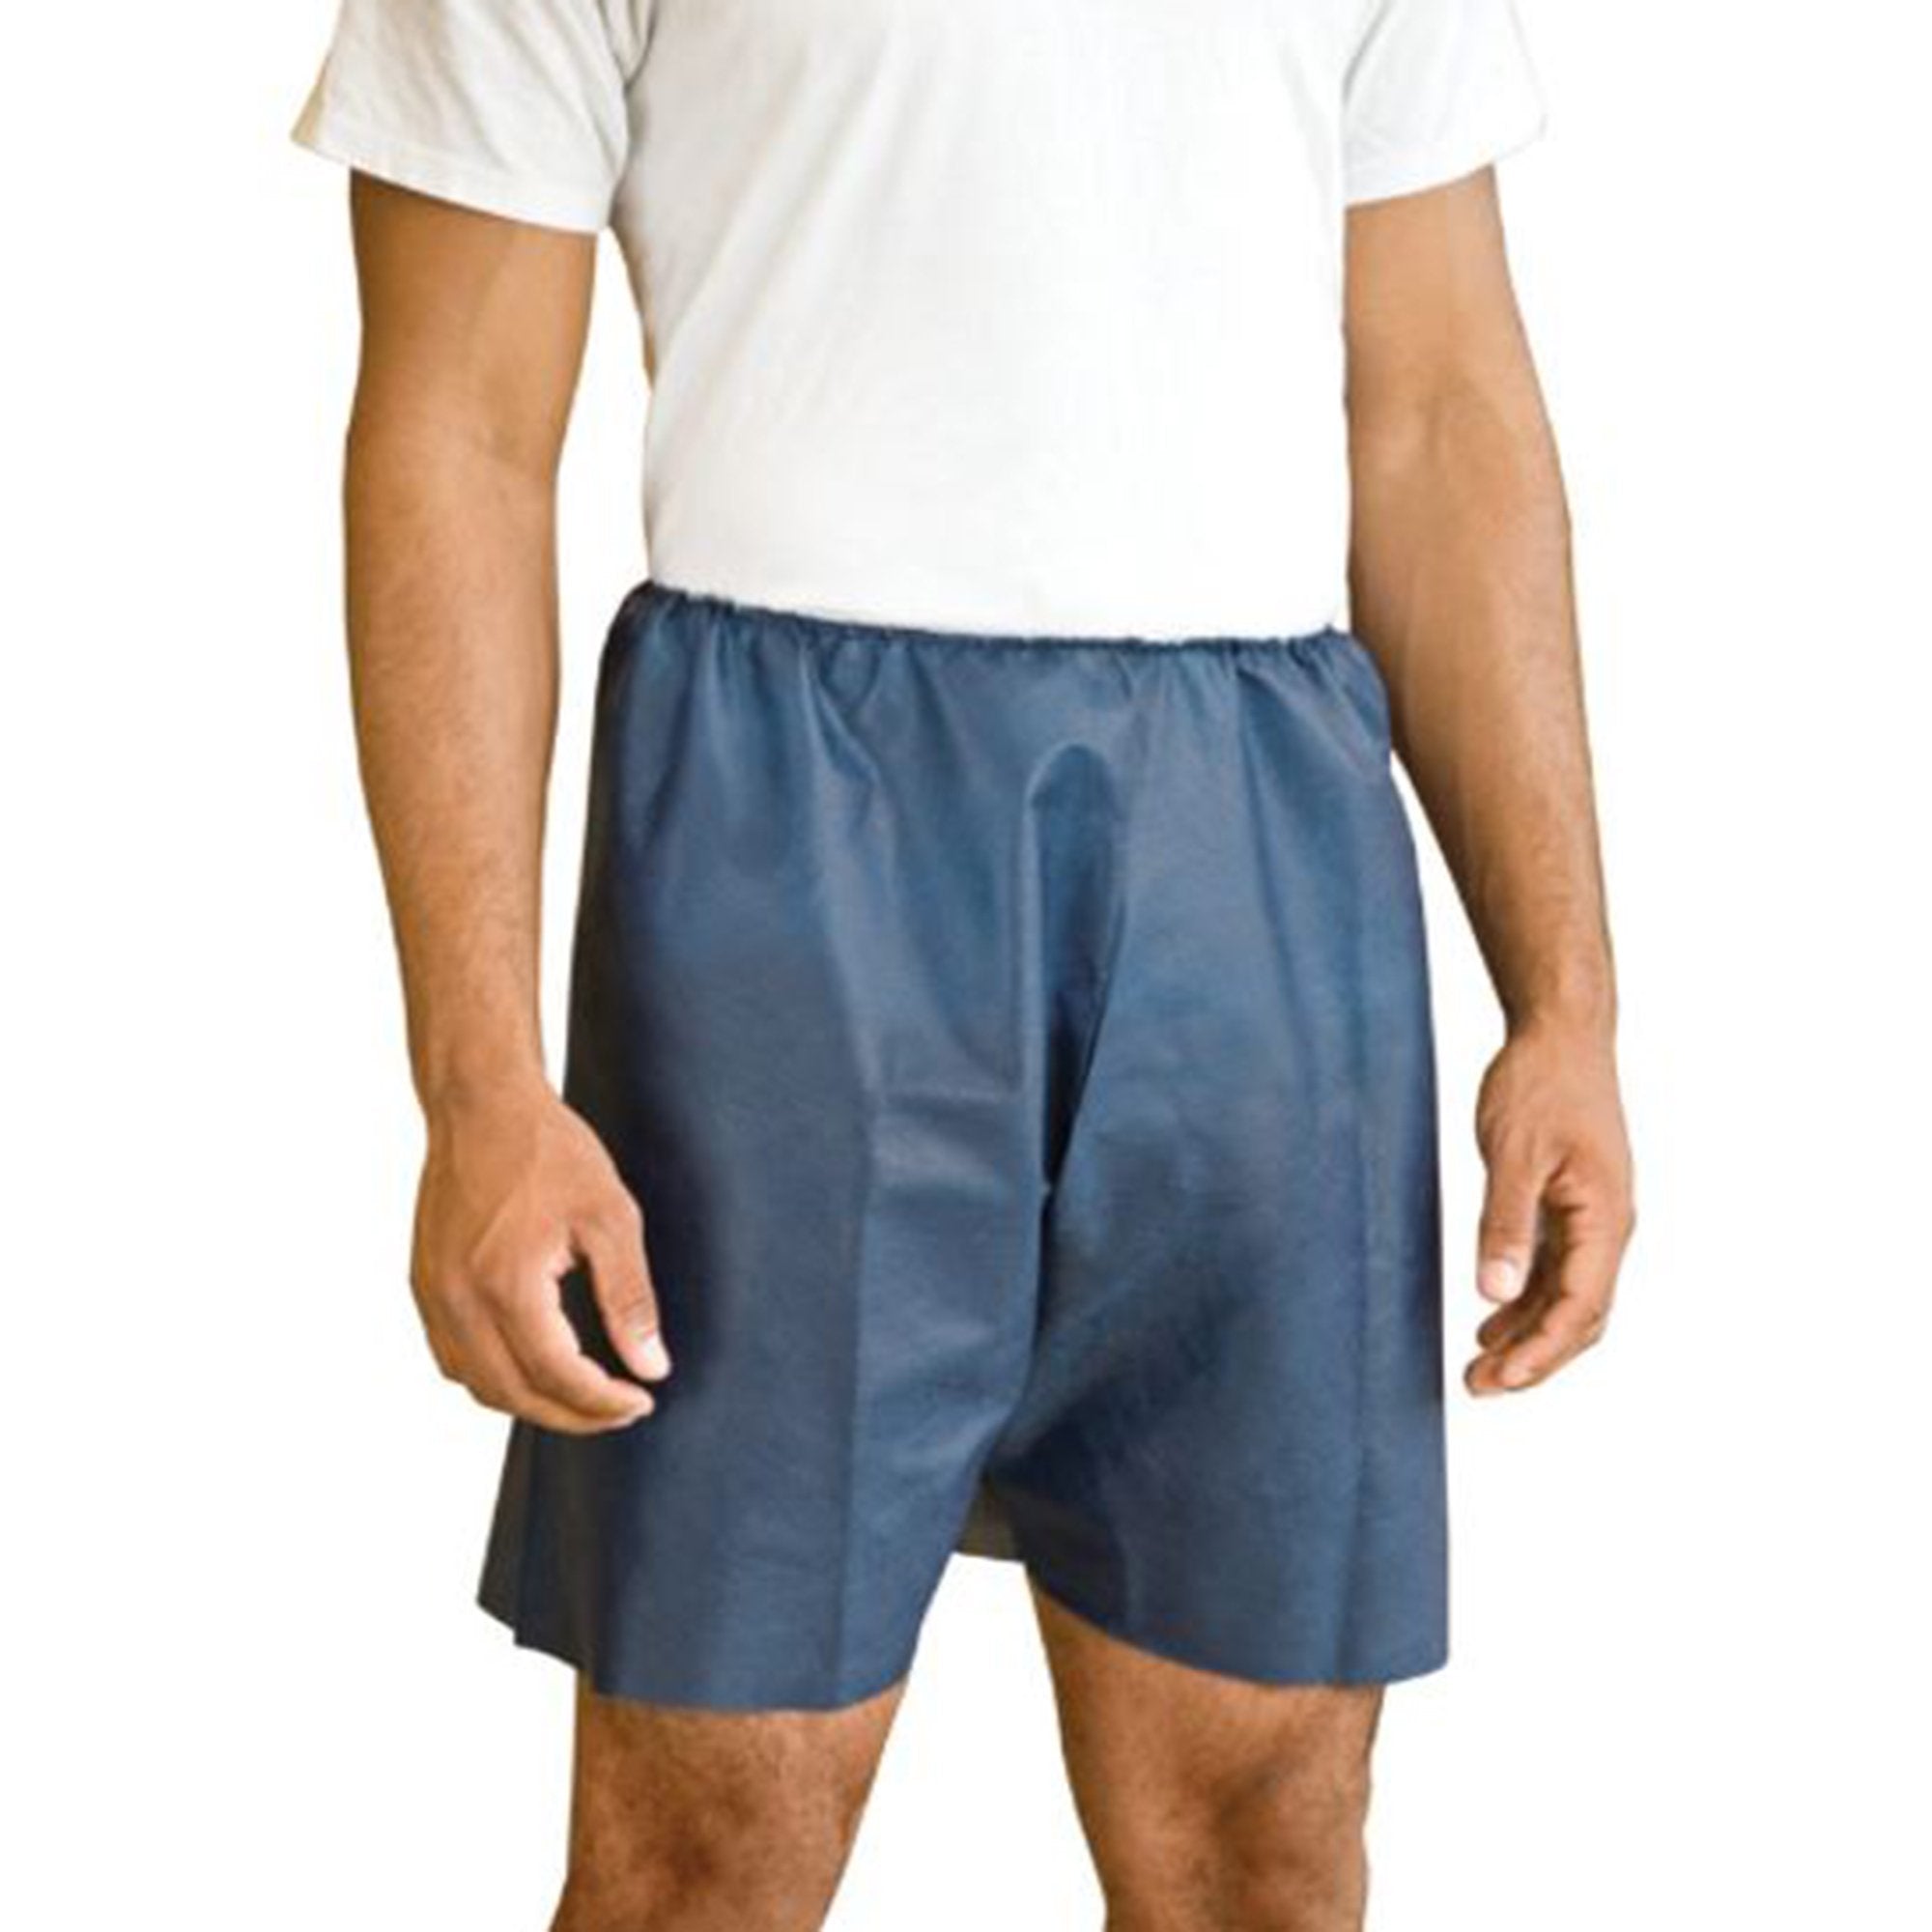 Exam Shorts MediShorts® Small / Medium Navy Blue Nonwoven Adult Disposable